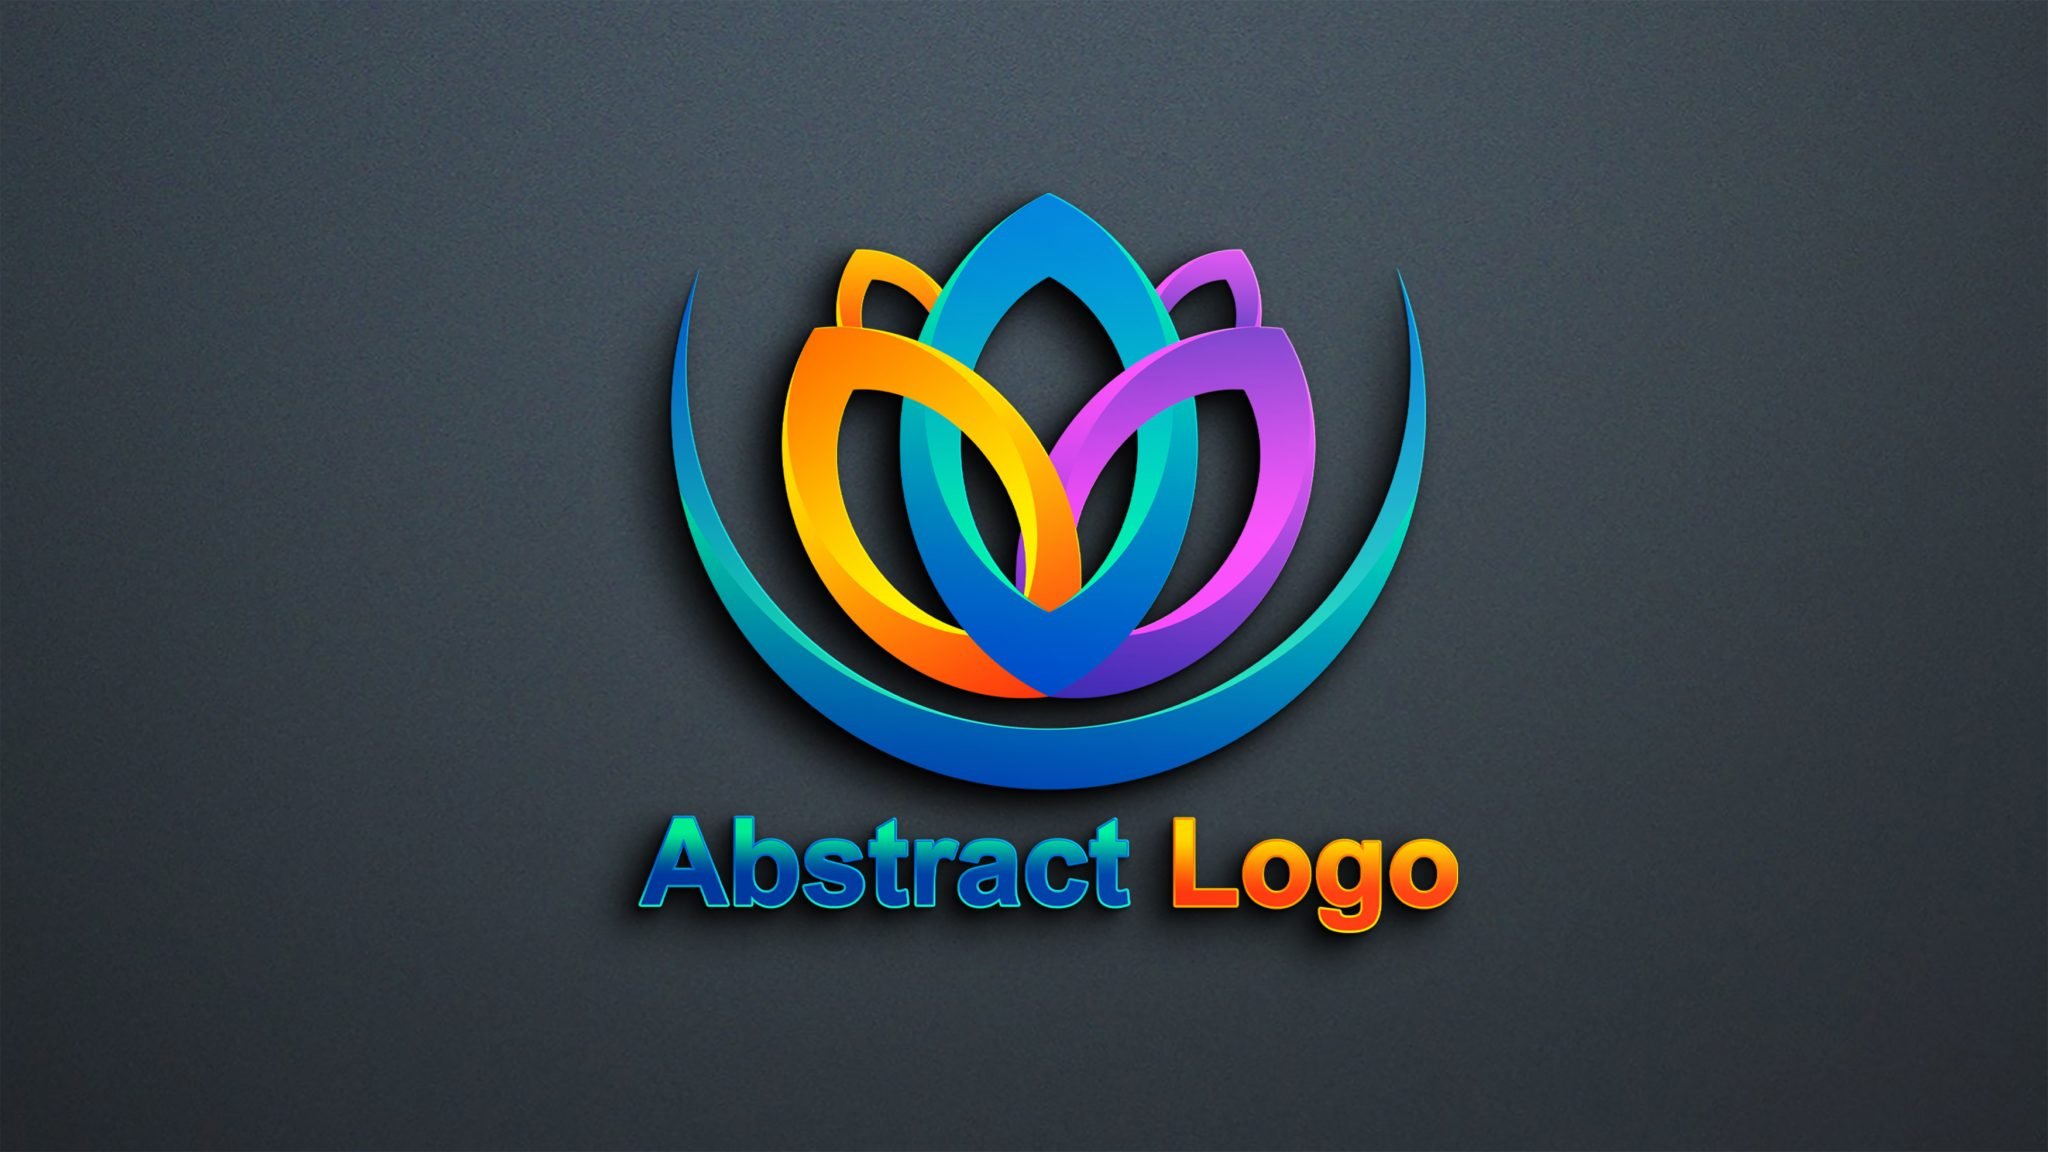 illustrator logo design templates free download